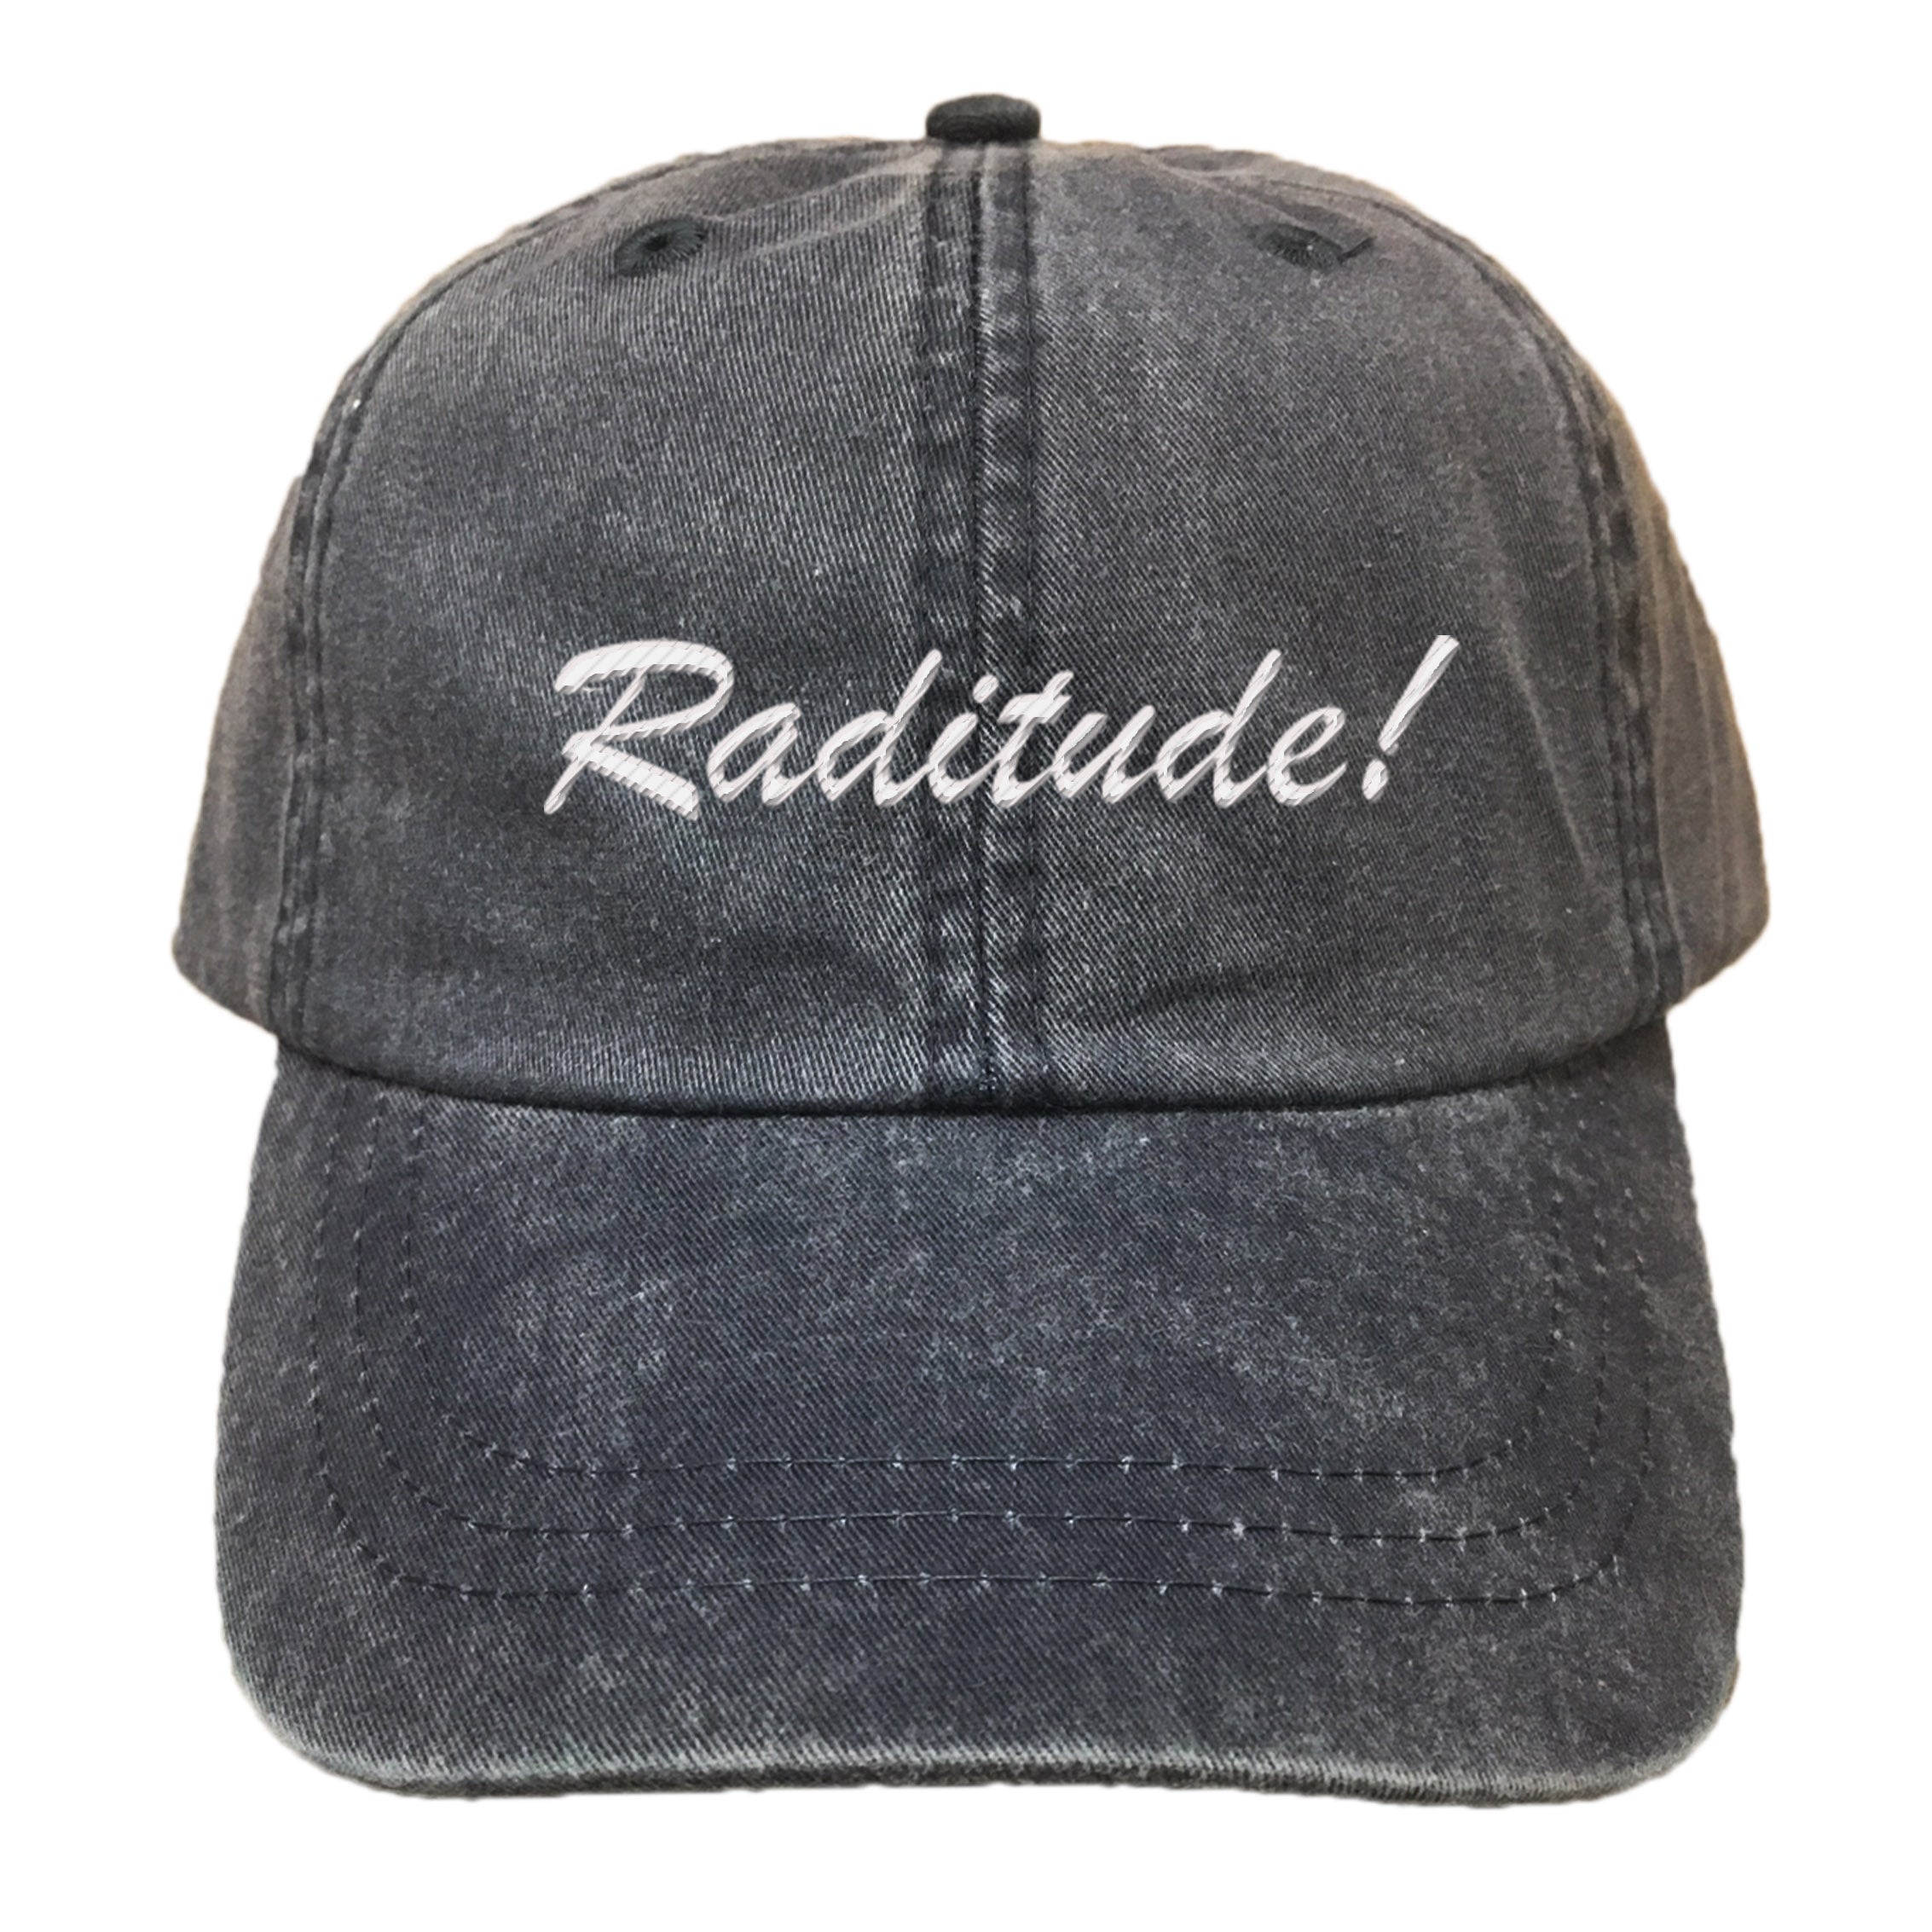 Raditude Script EMBROIDERED Cotton Twill HAT